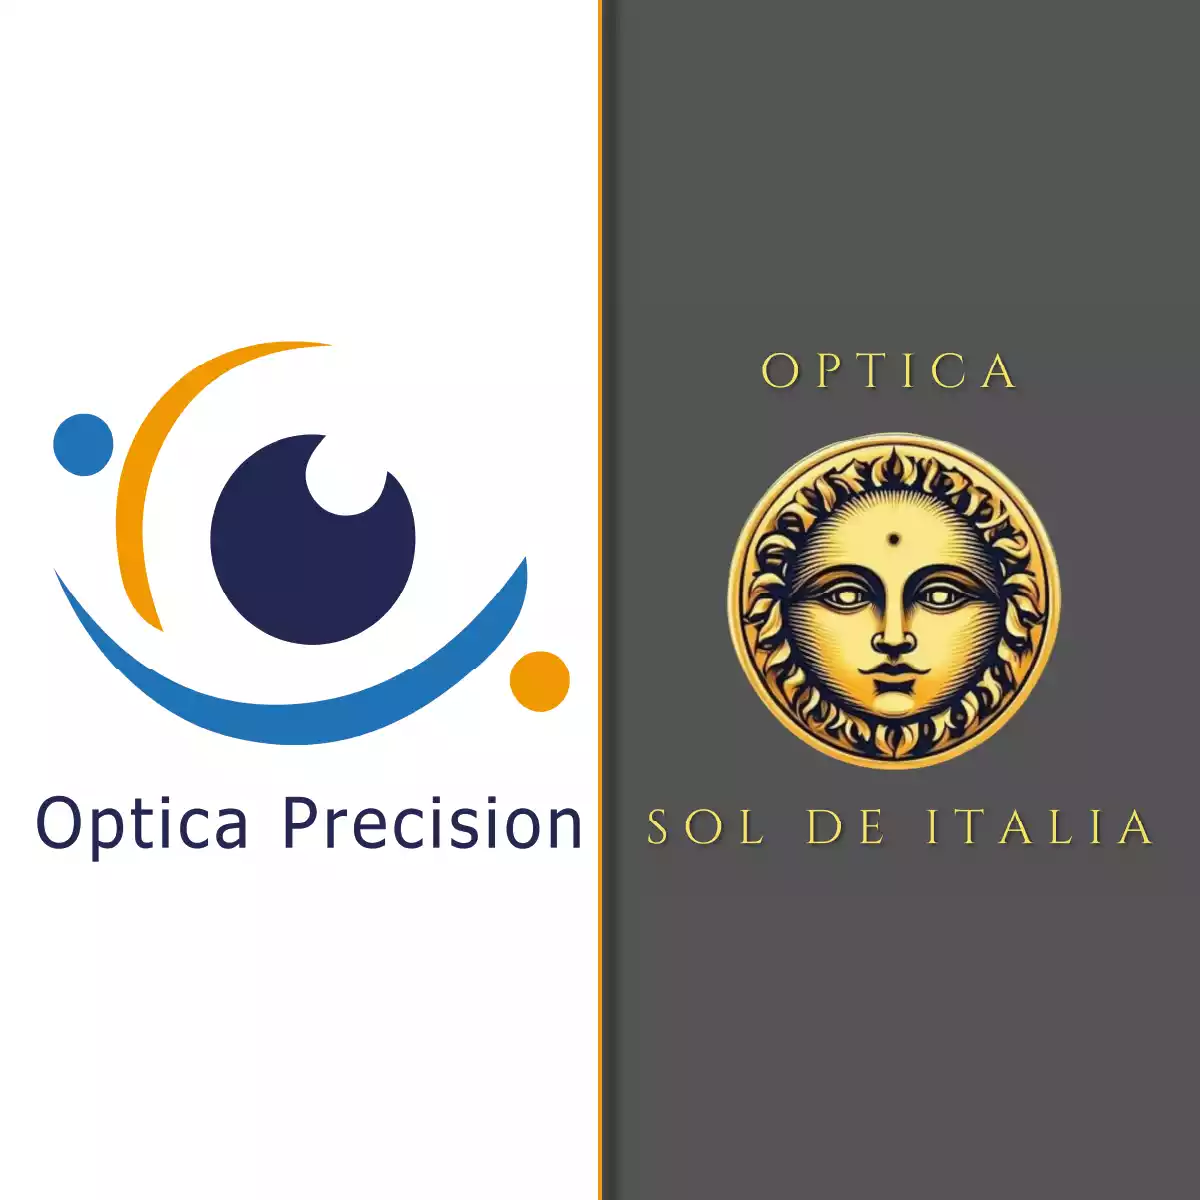 Optica sol de italia y optica precision